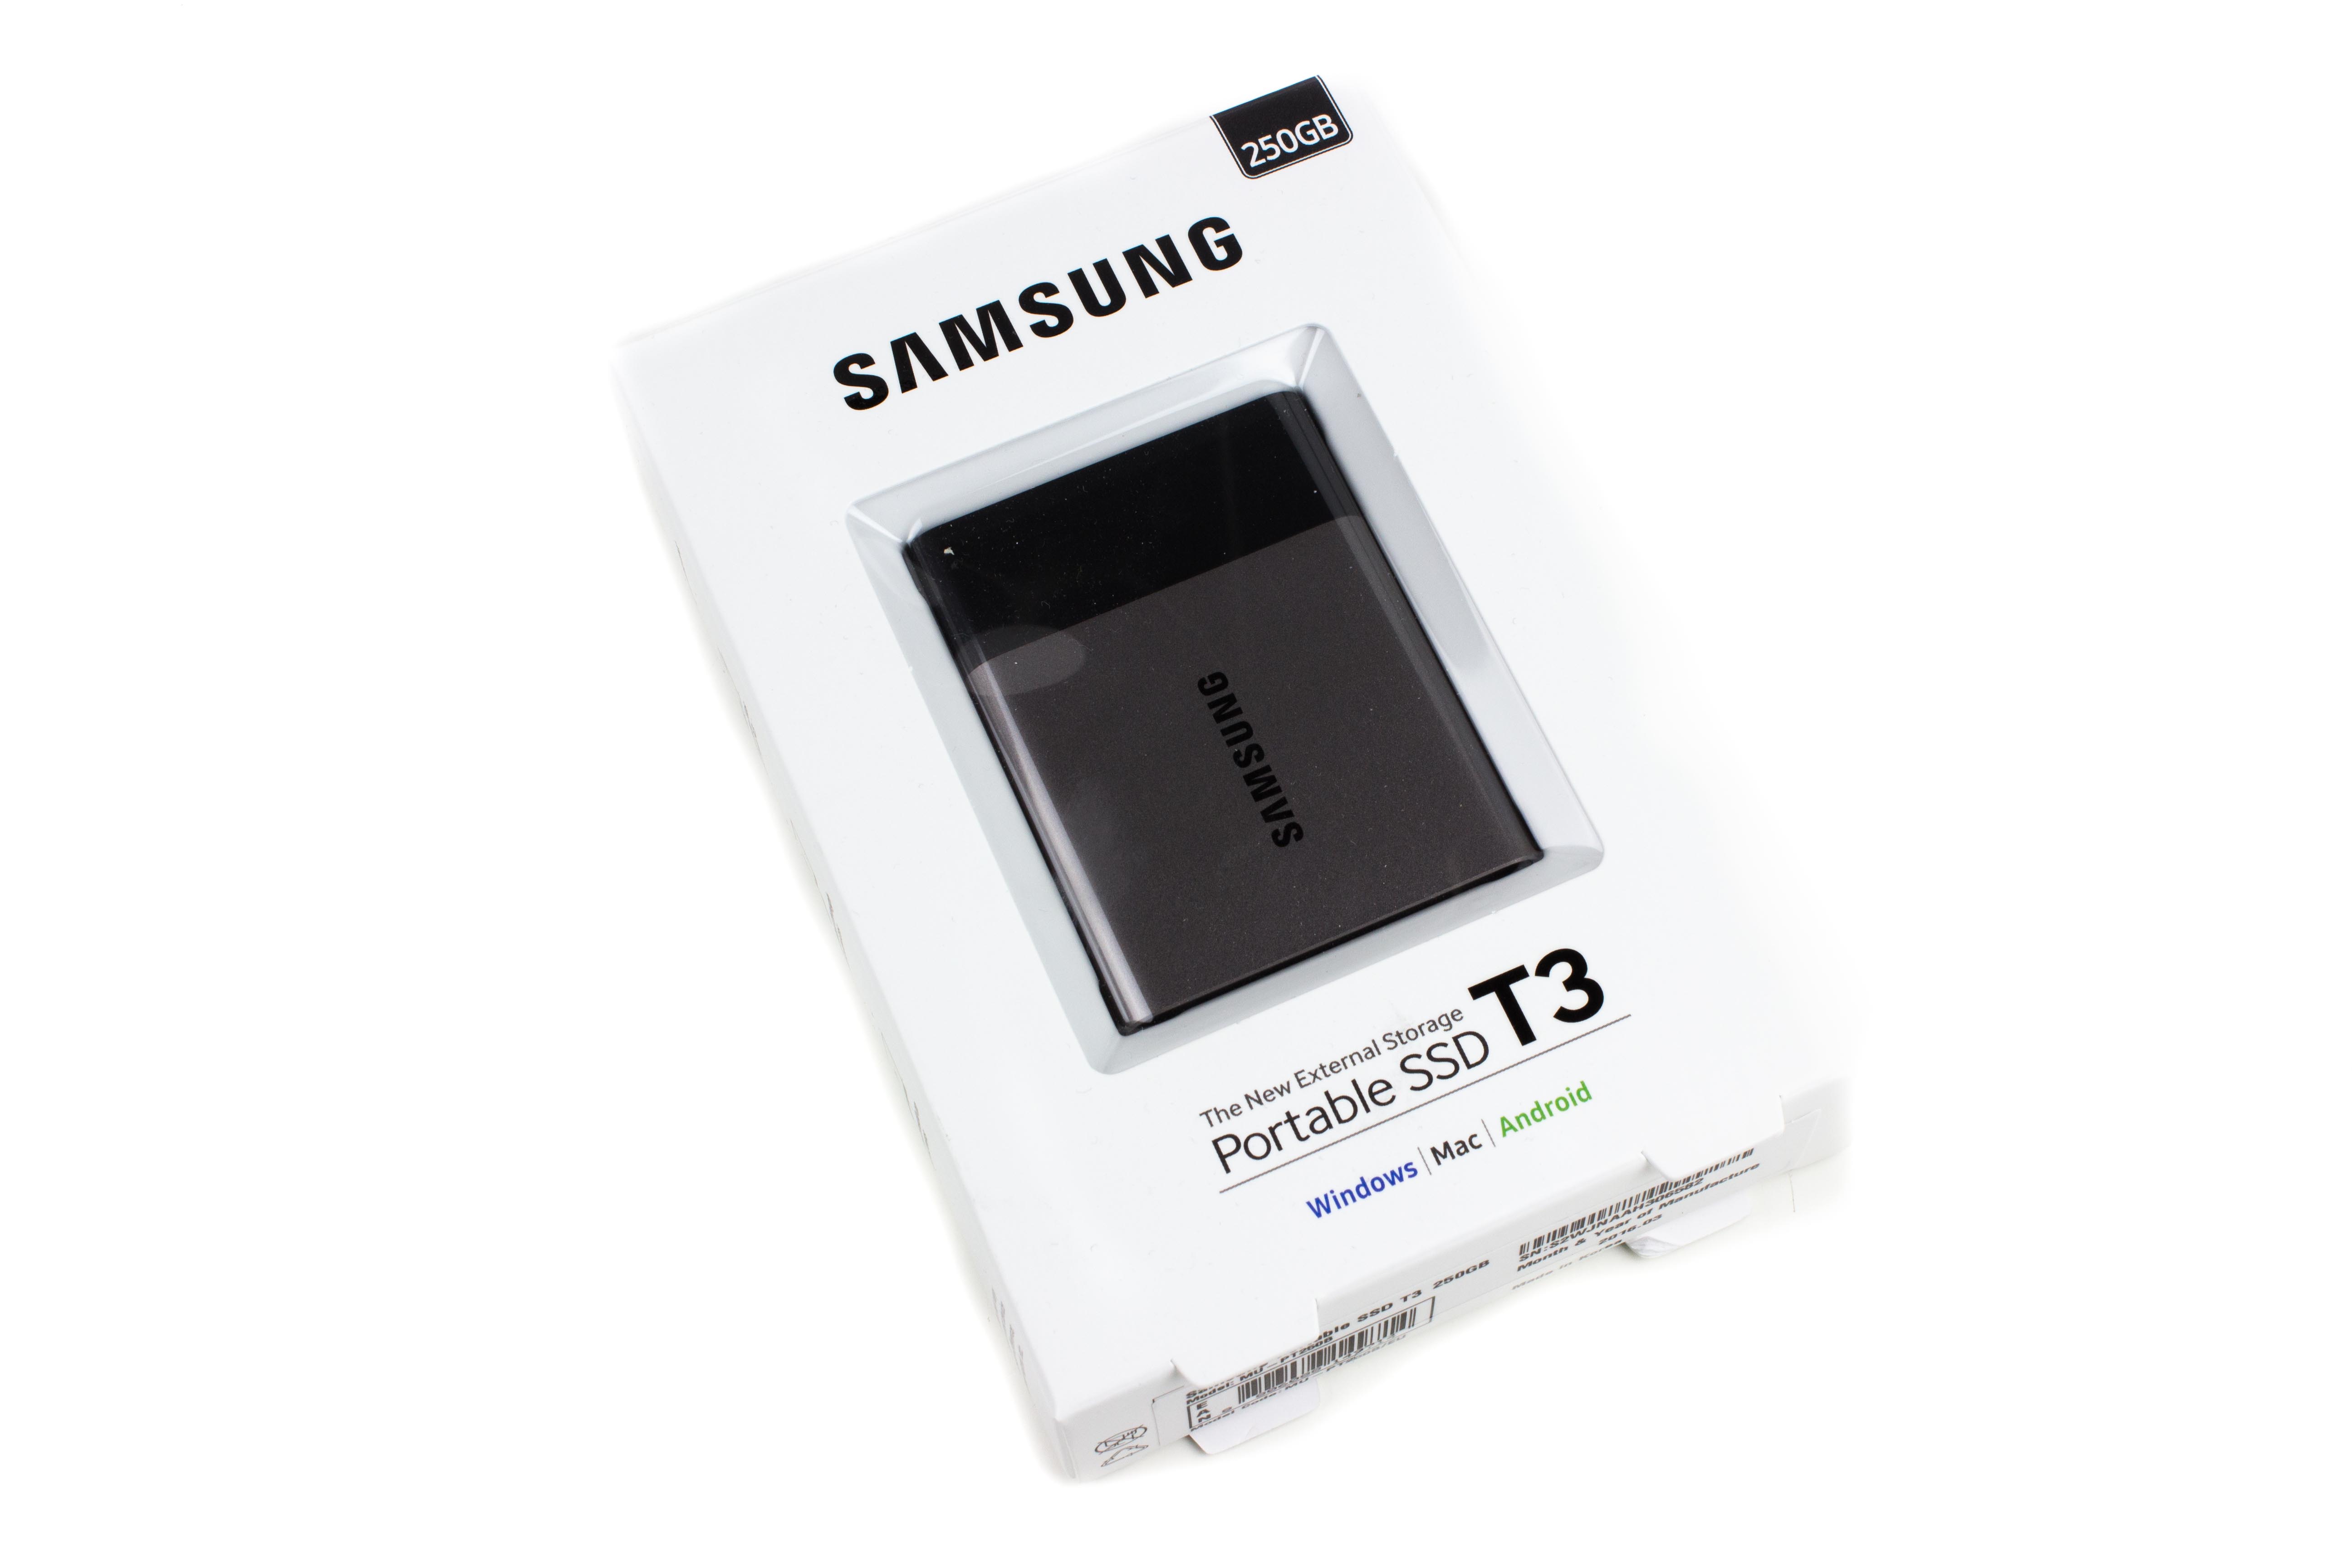 Samsung Portable SSD T3 - Lesertest Leo Verpackung